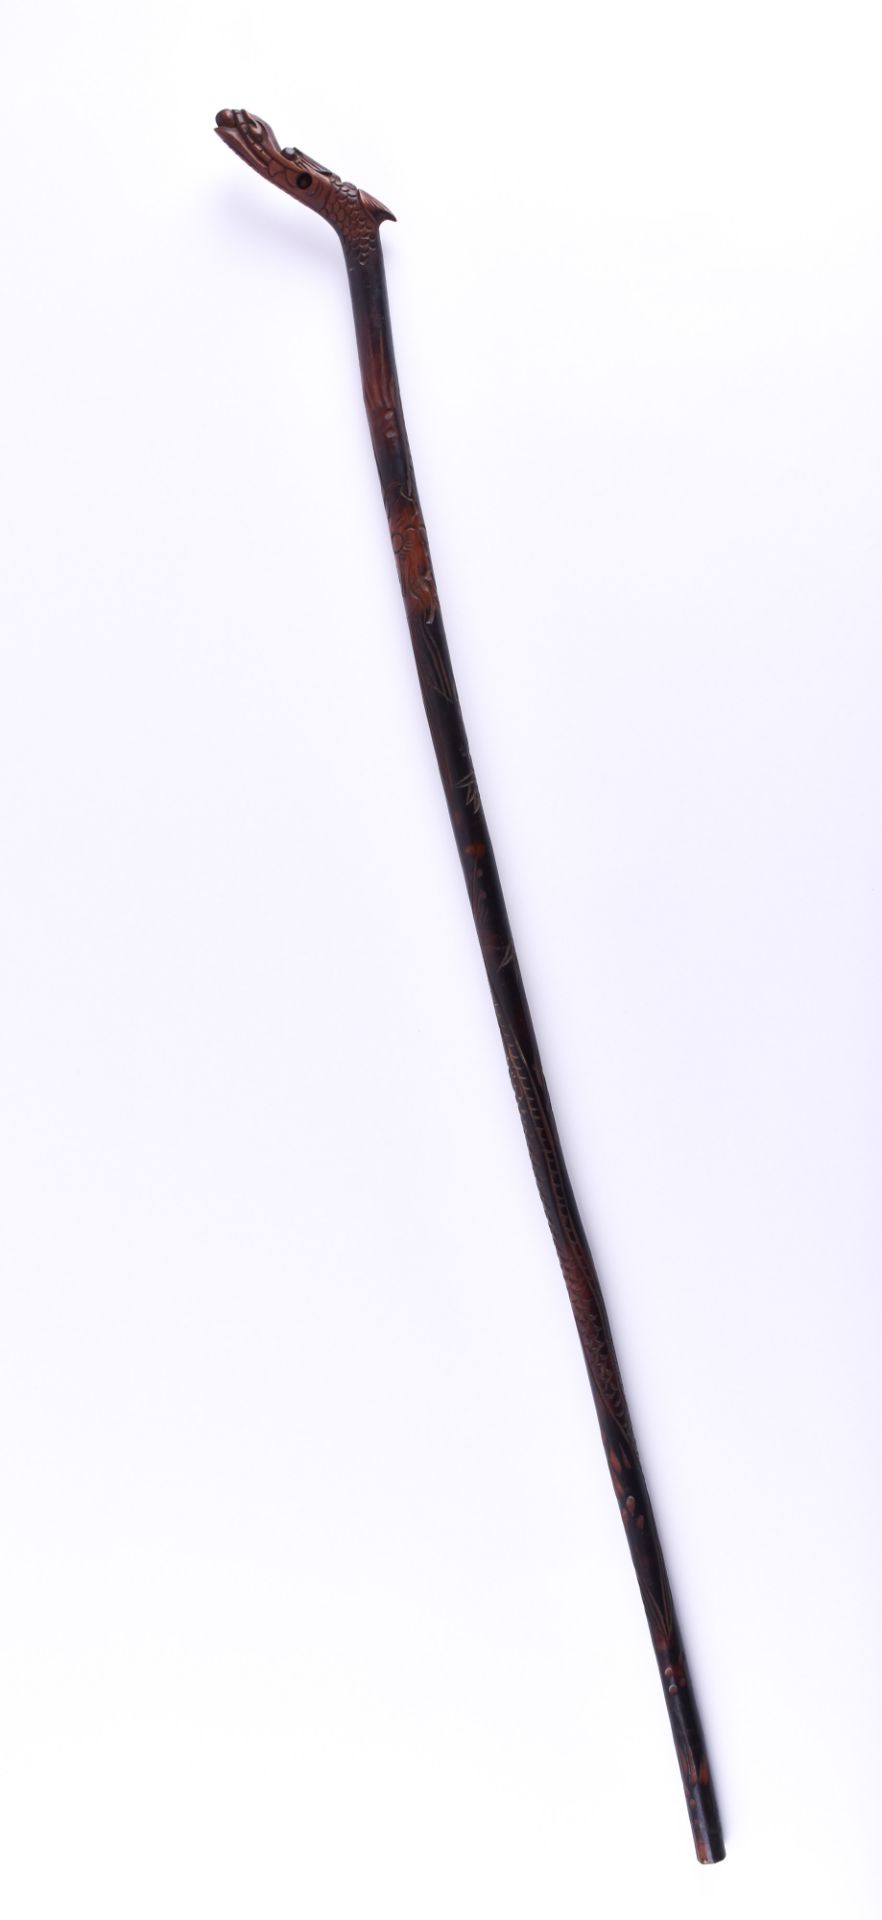 Gehstock China Qing DynastieWurzelholz, beschnitzt umlaufend mit Drachenmotiven, L: 103 cmWalking